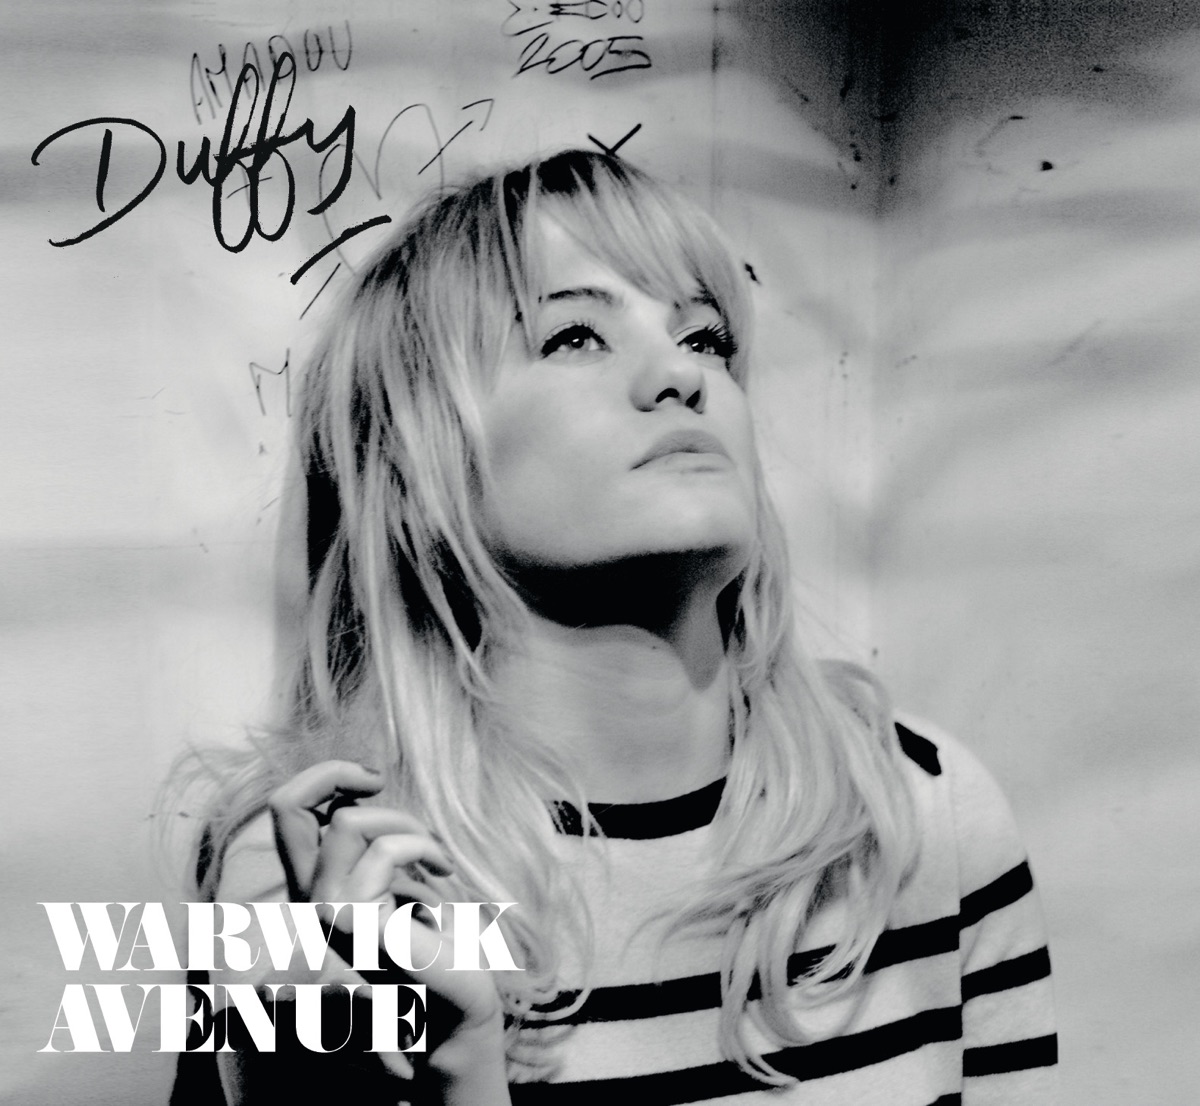 Duffy Warwick Avenue cover artwork